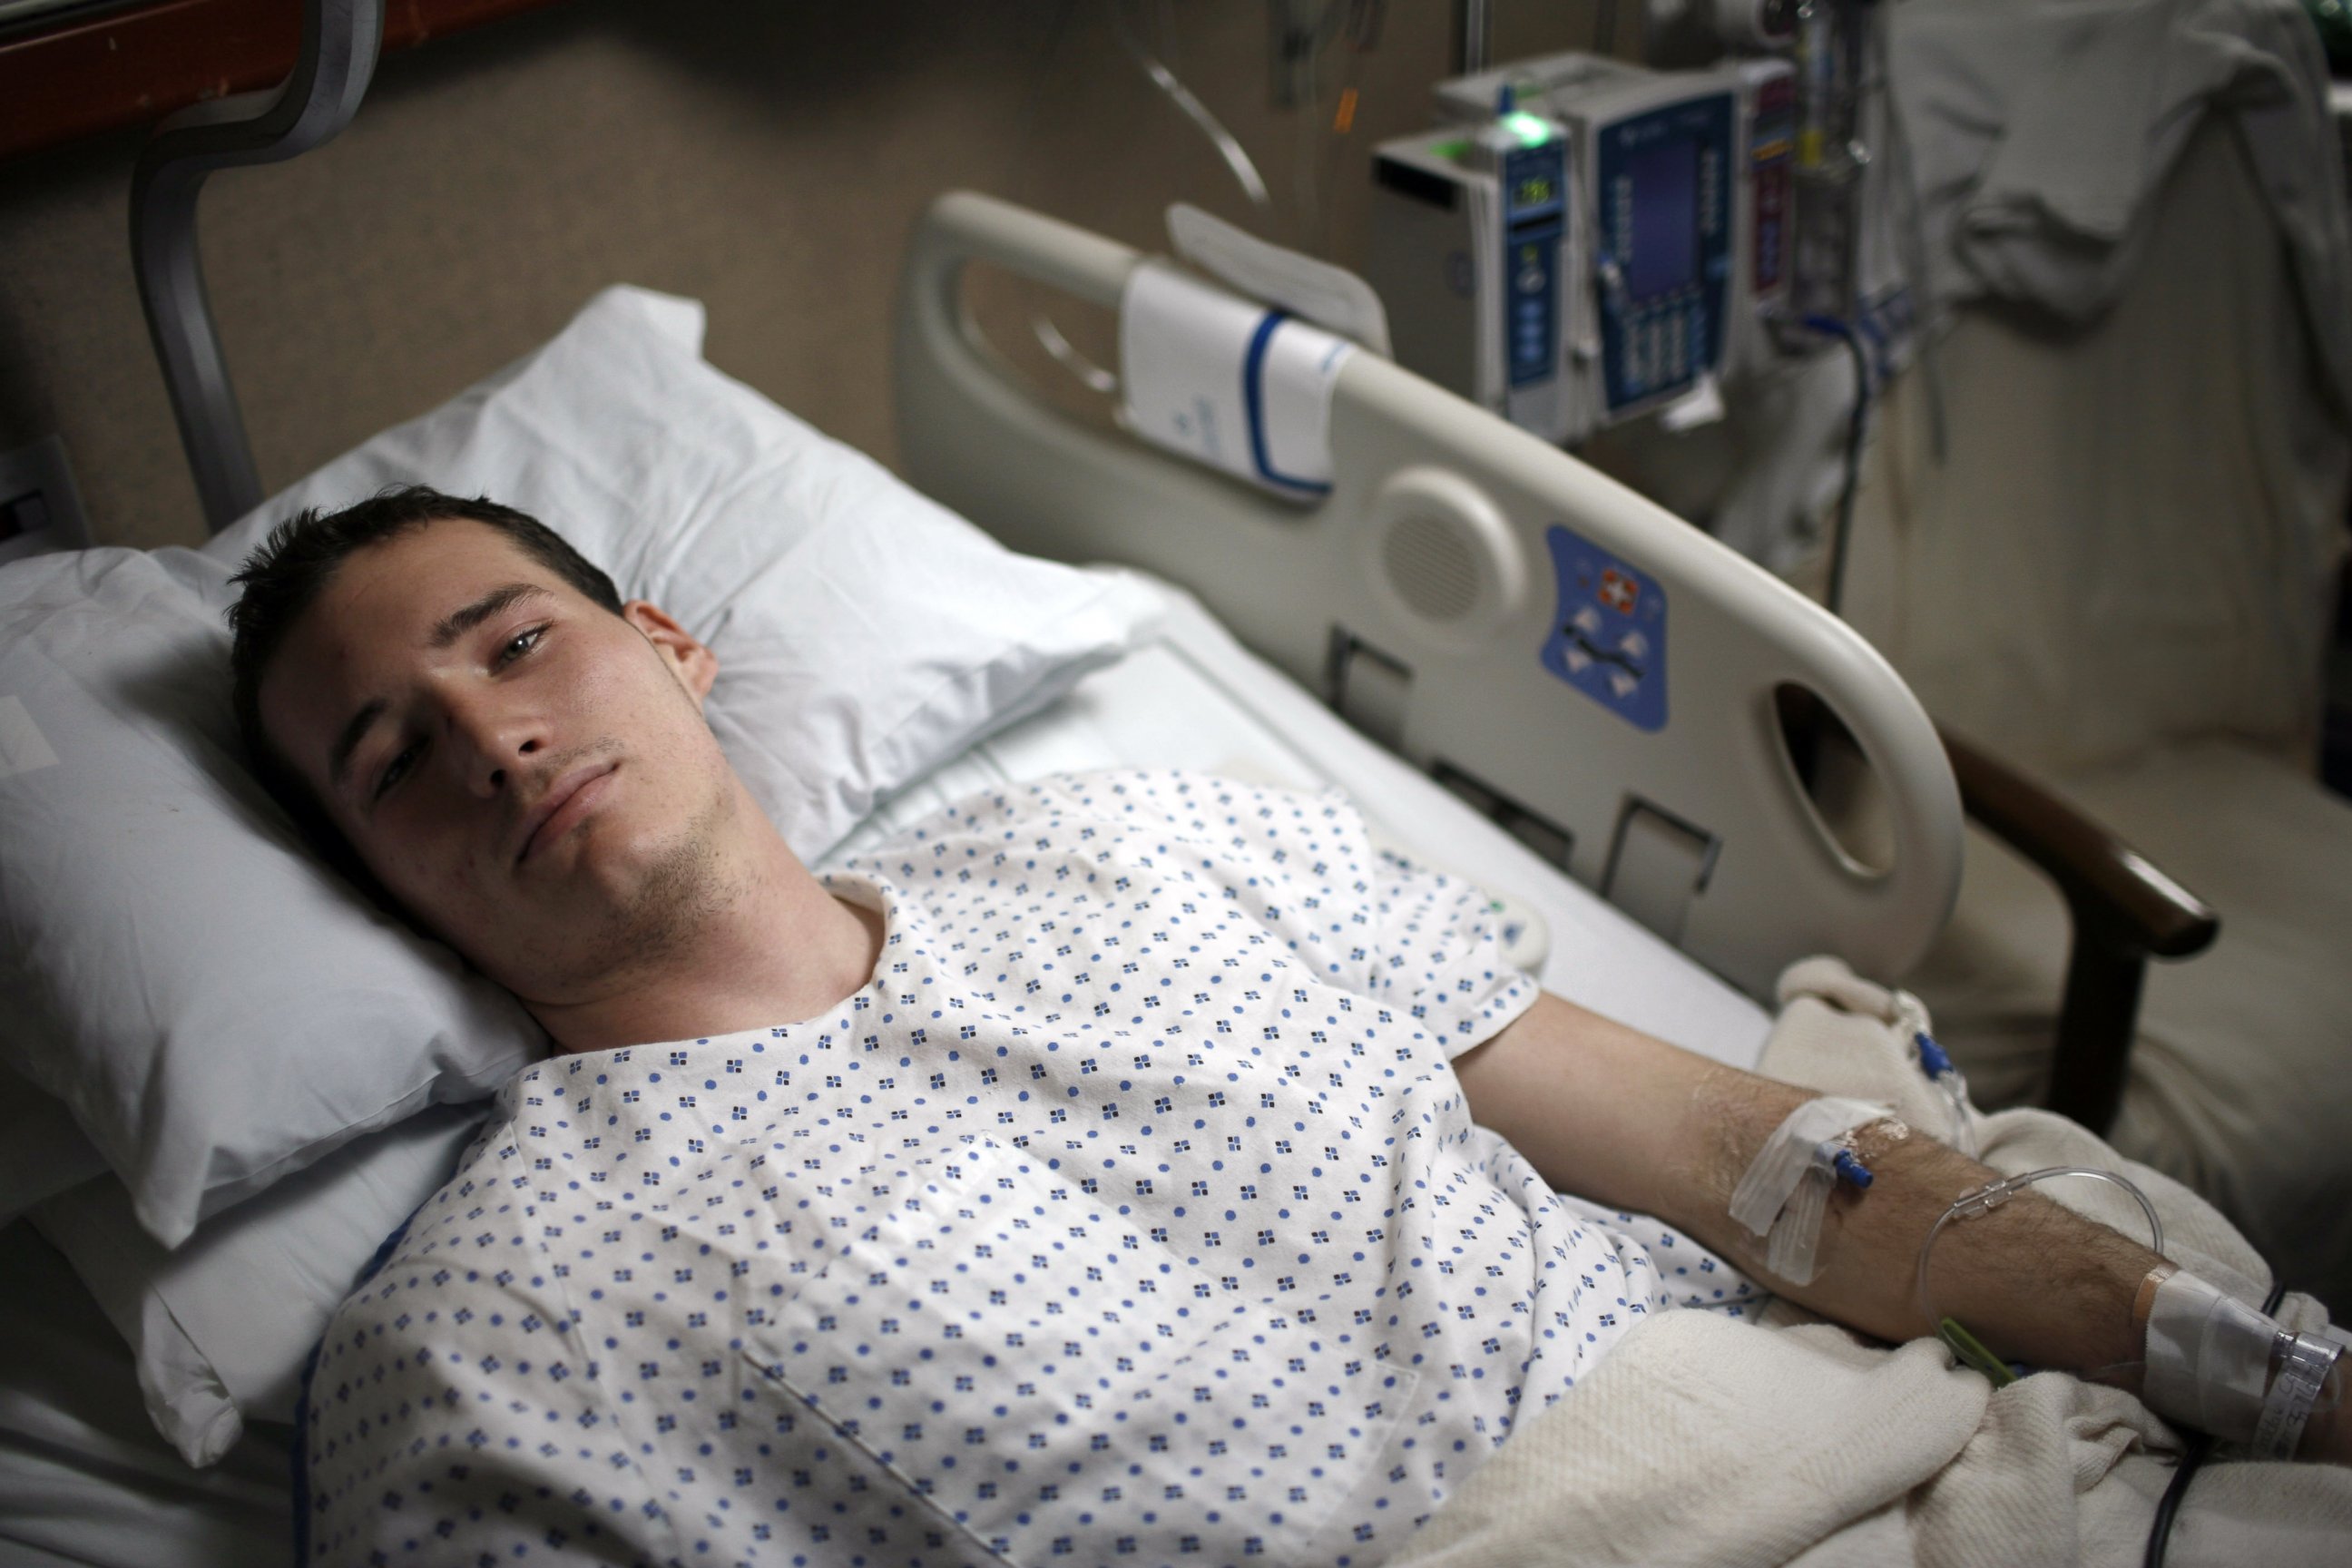 PHOTO: Virginia Tech student Colin Goddard lies in his hospital bed on April 19, 2007 in Blacksburg, Va.